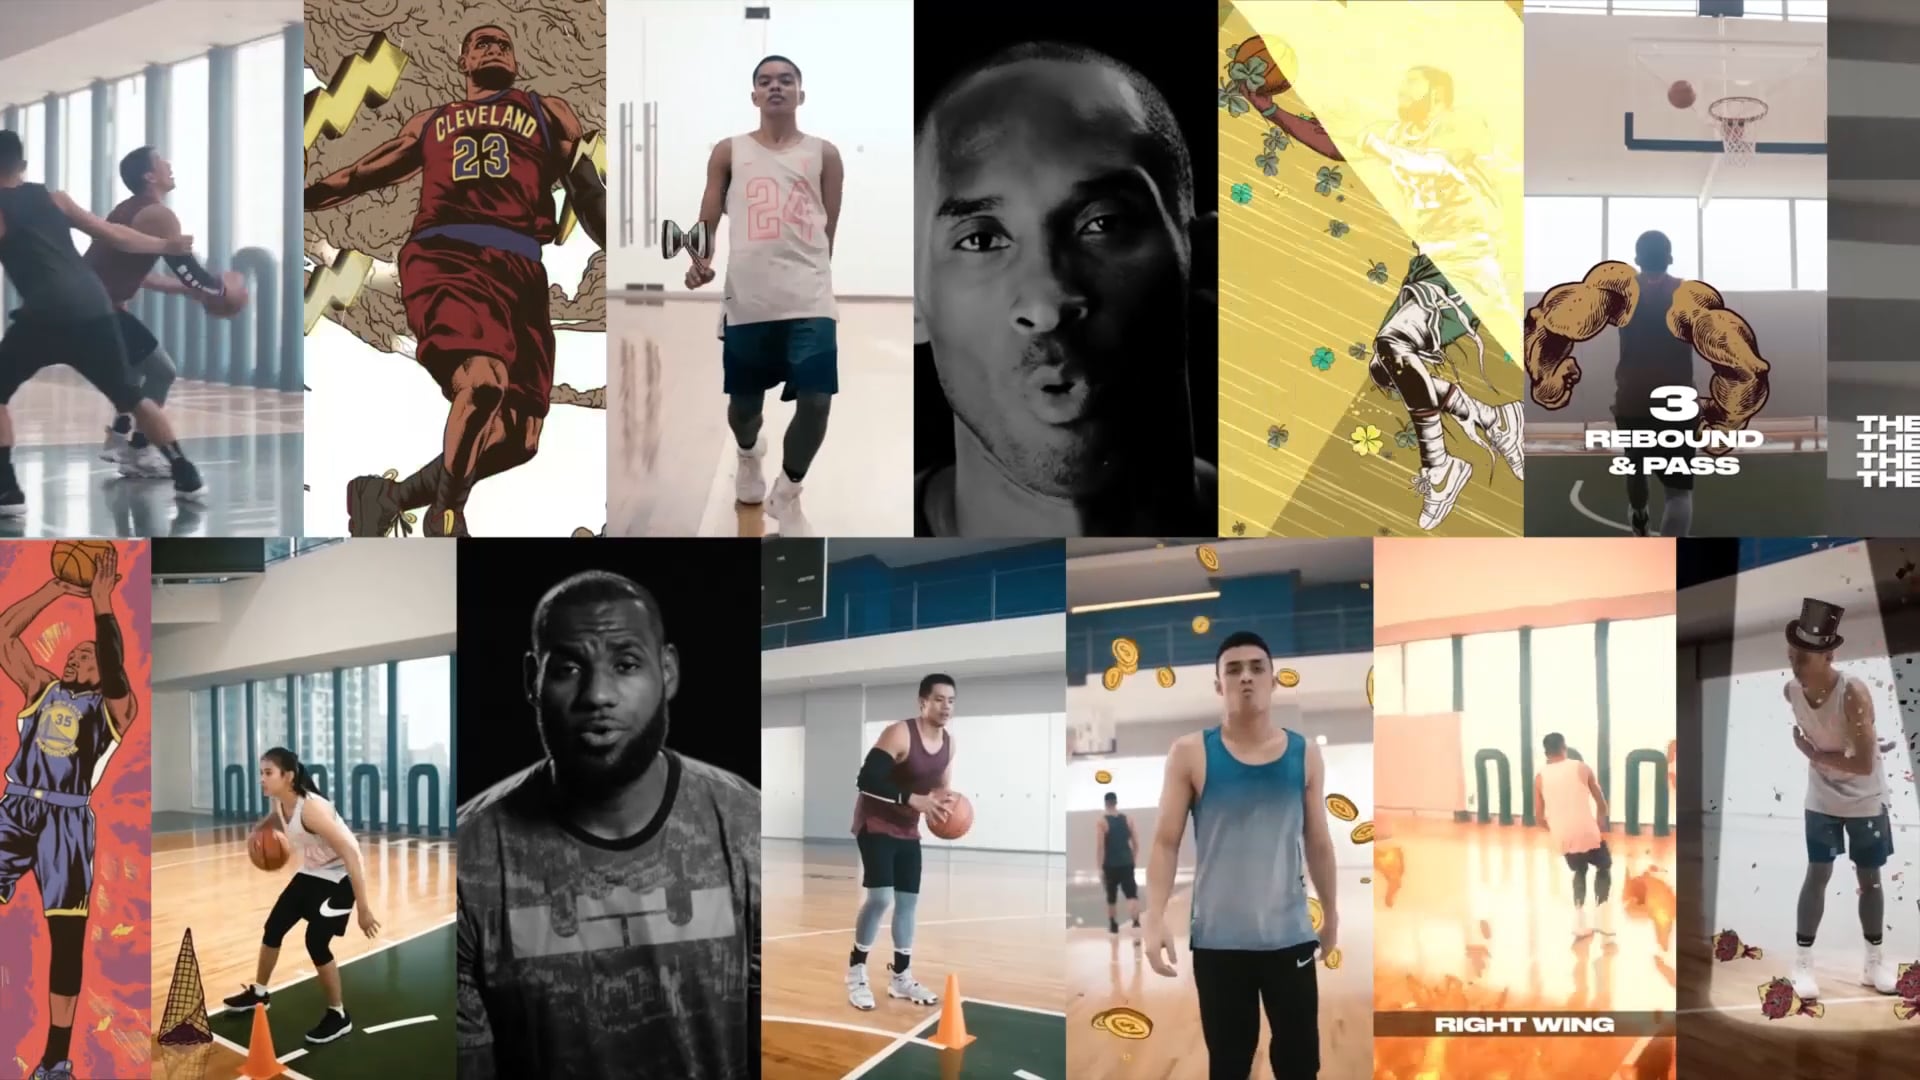 Nike Court on Vimeo